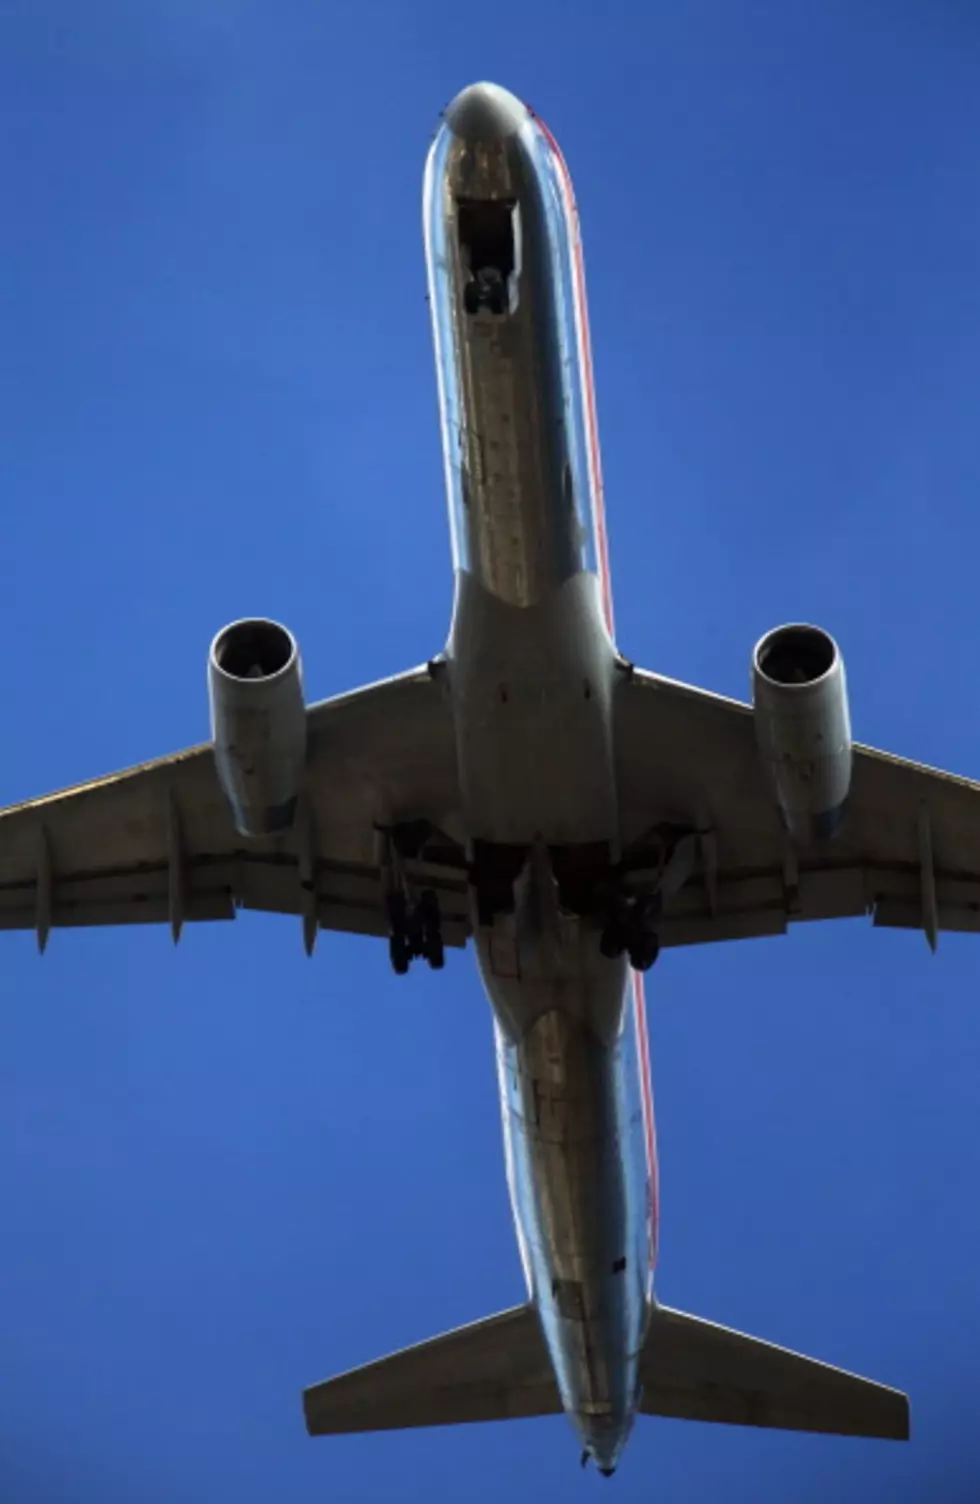 Teen Stowaway Survives Flight from California to Hawaii in Plane’s Wheel Well [Video]